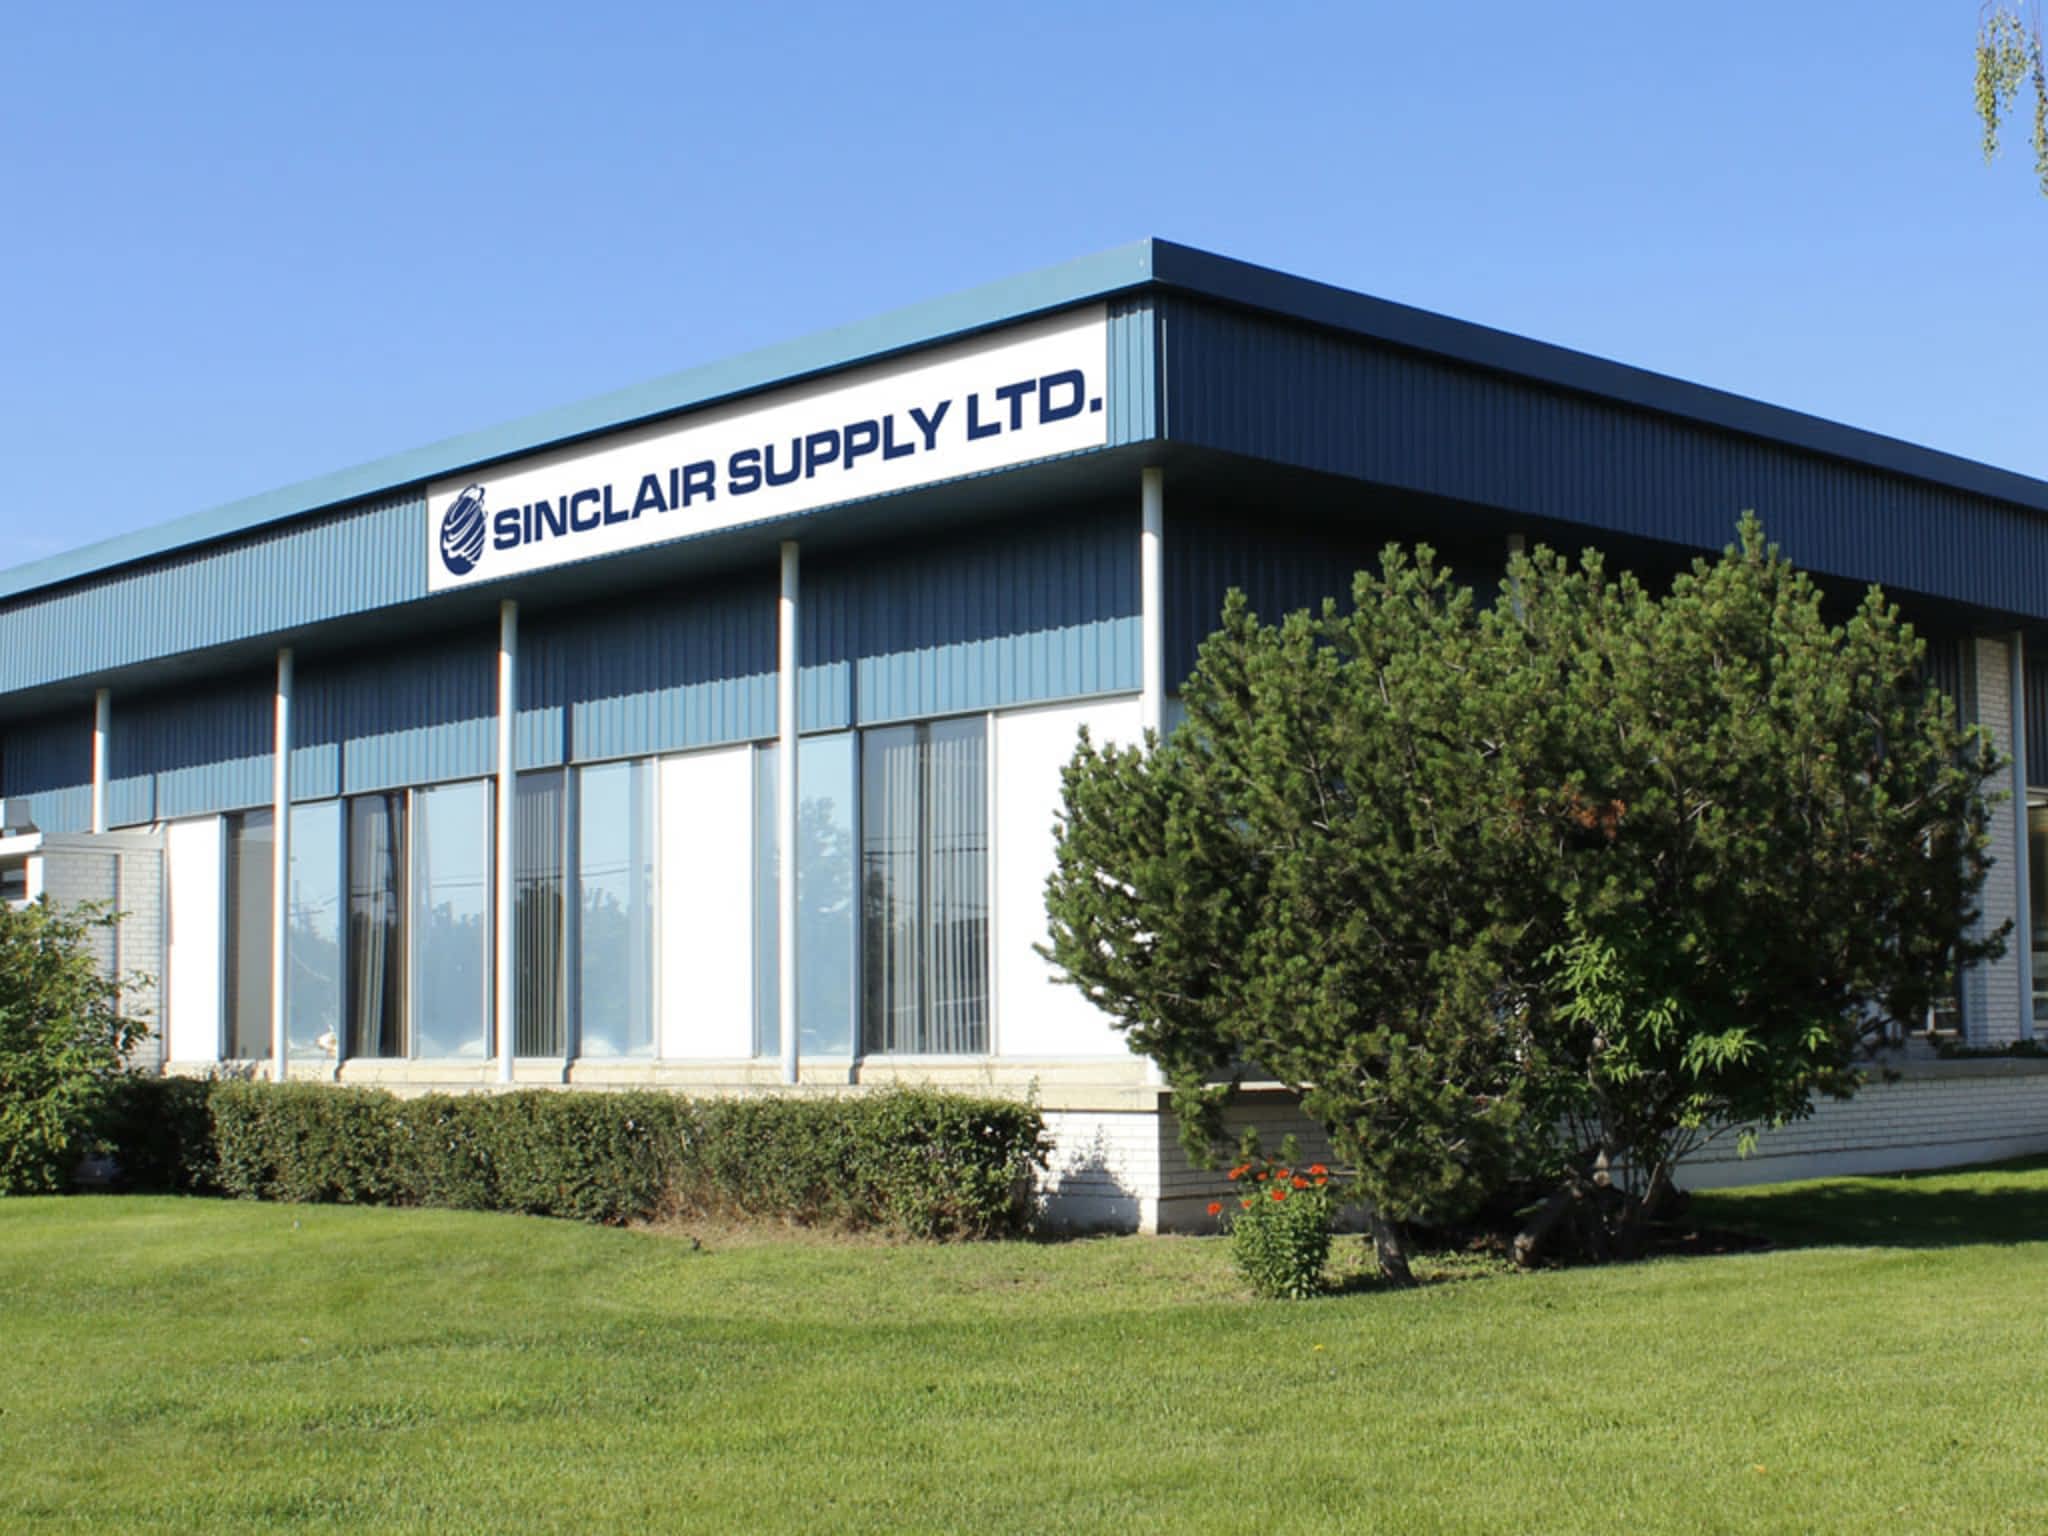 photo Sinclair Supply Ltd